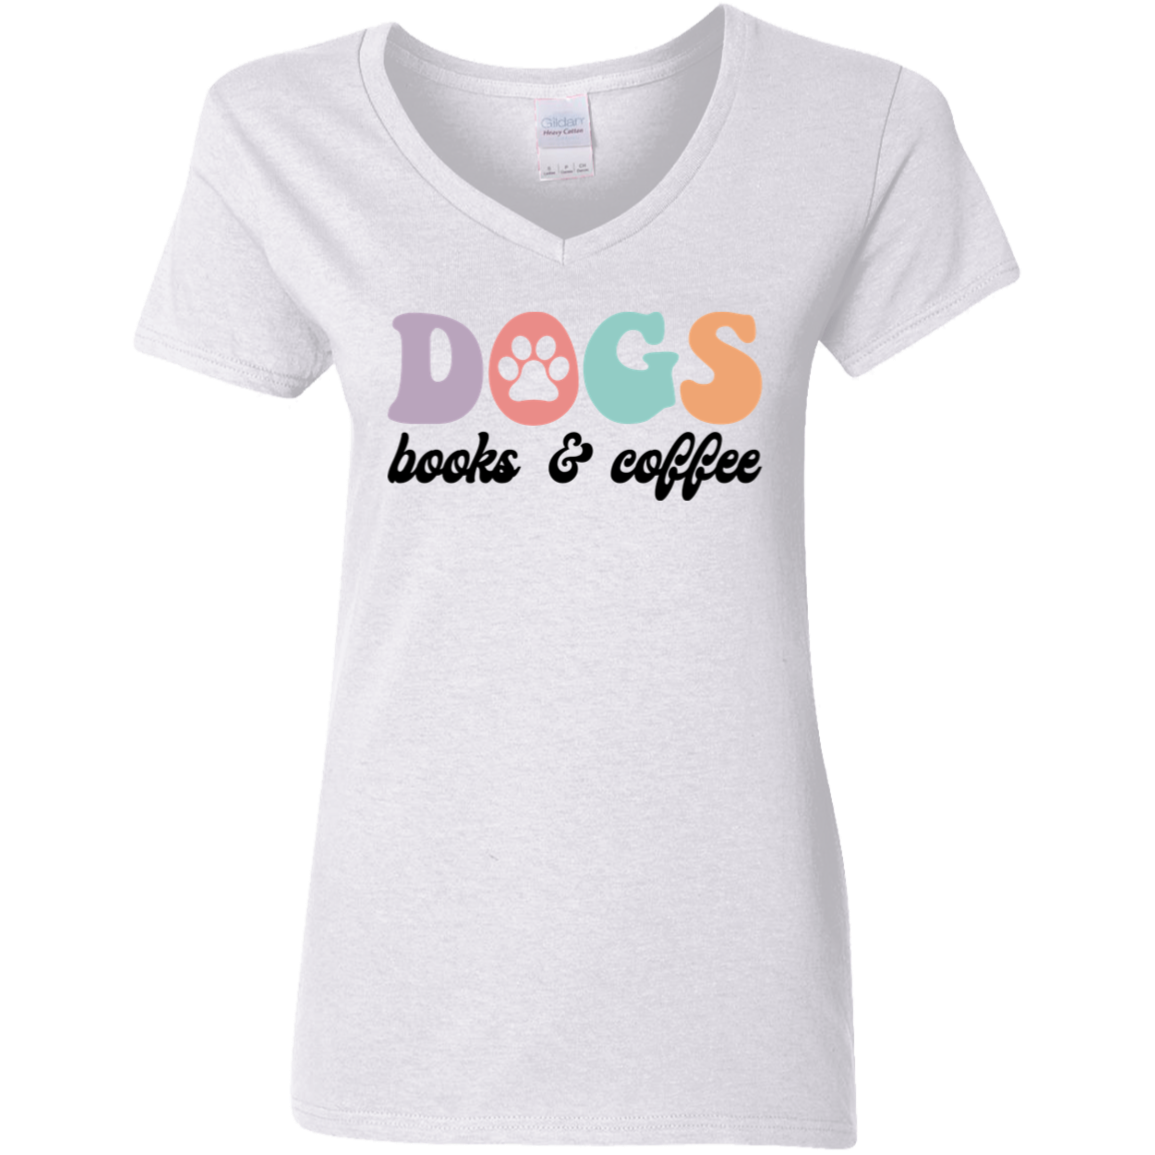 Dogs Books & Coffee Ladies' V-Neck T-Shirt